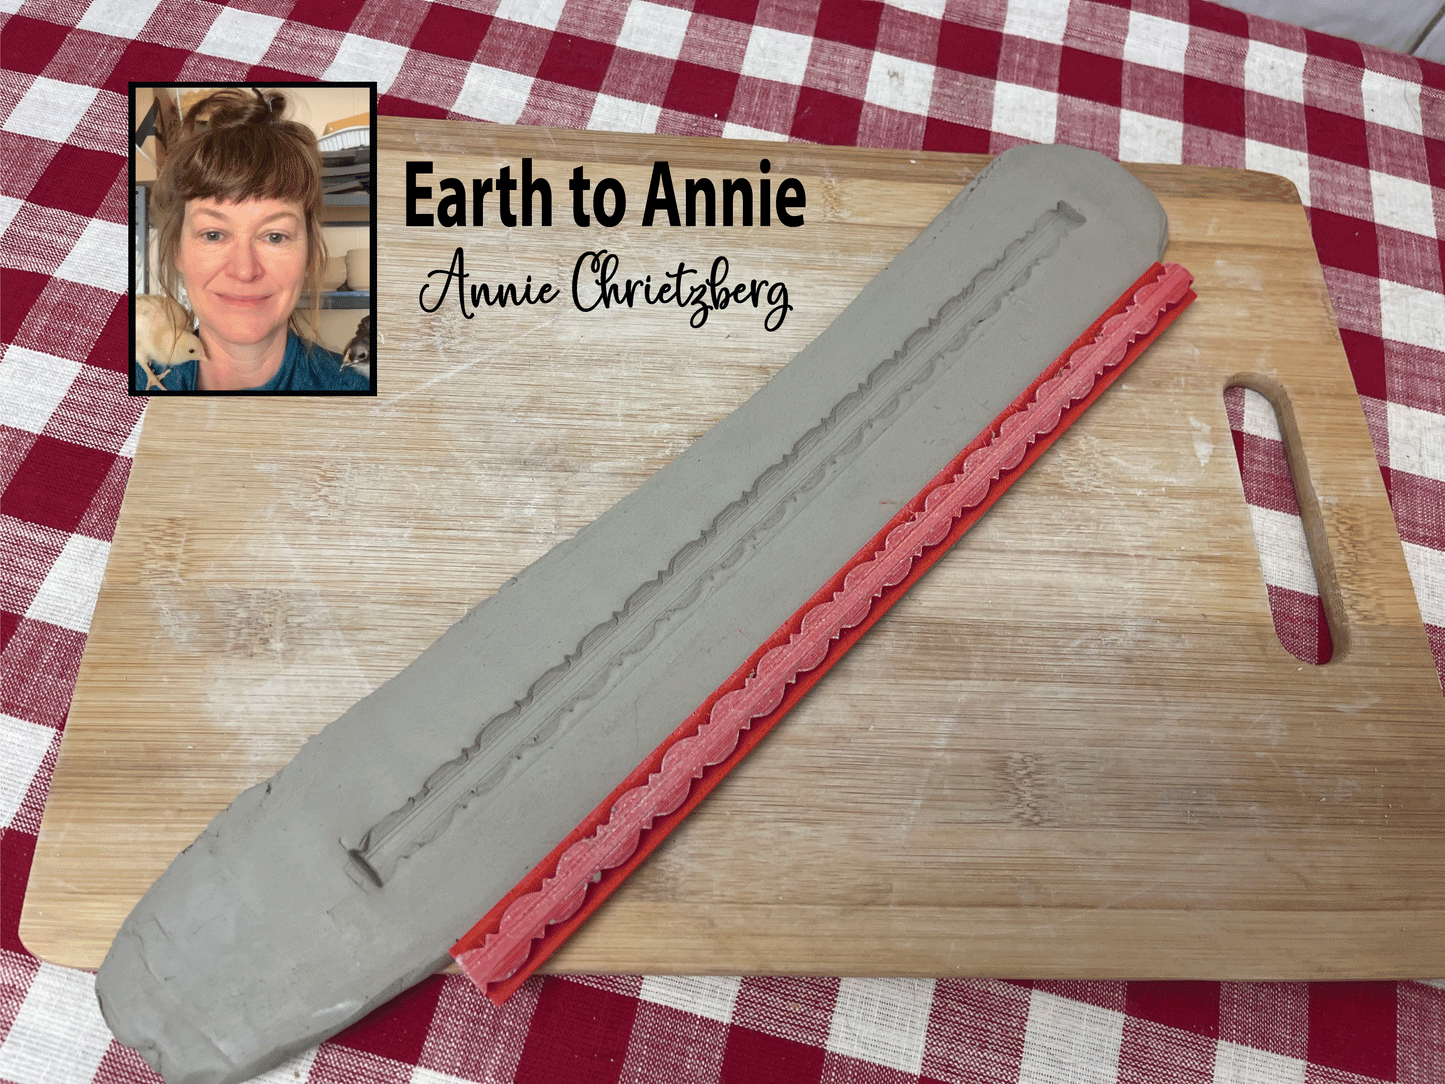 Motif Stick, Scallop 1 design - Ornate texture trim border tool - Earth to Annie - Annie Chrietzberg collaboration